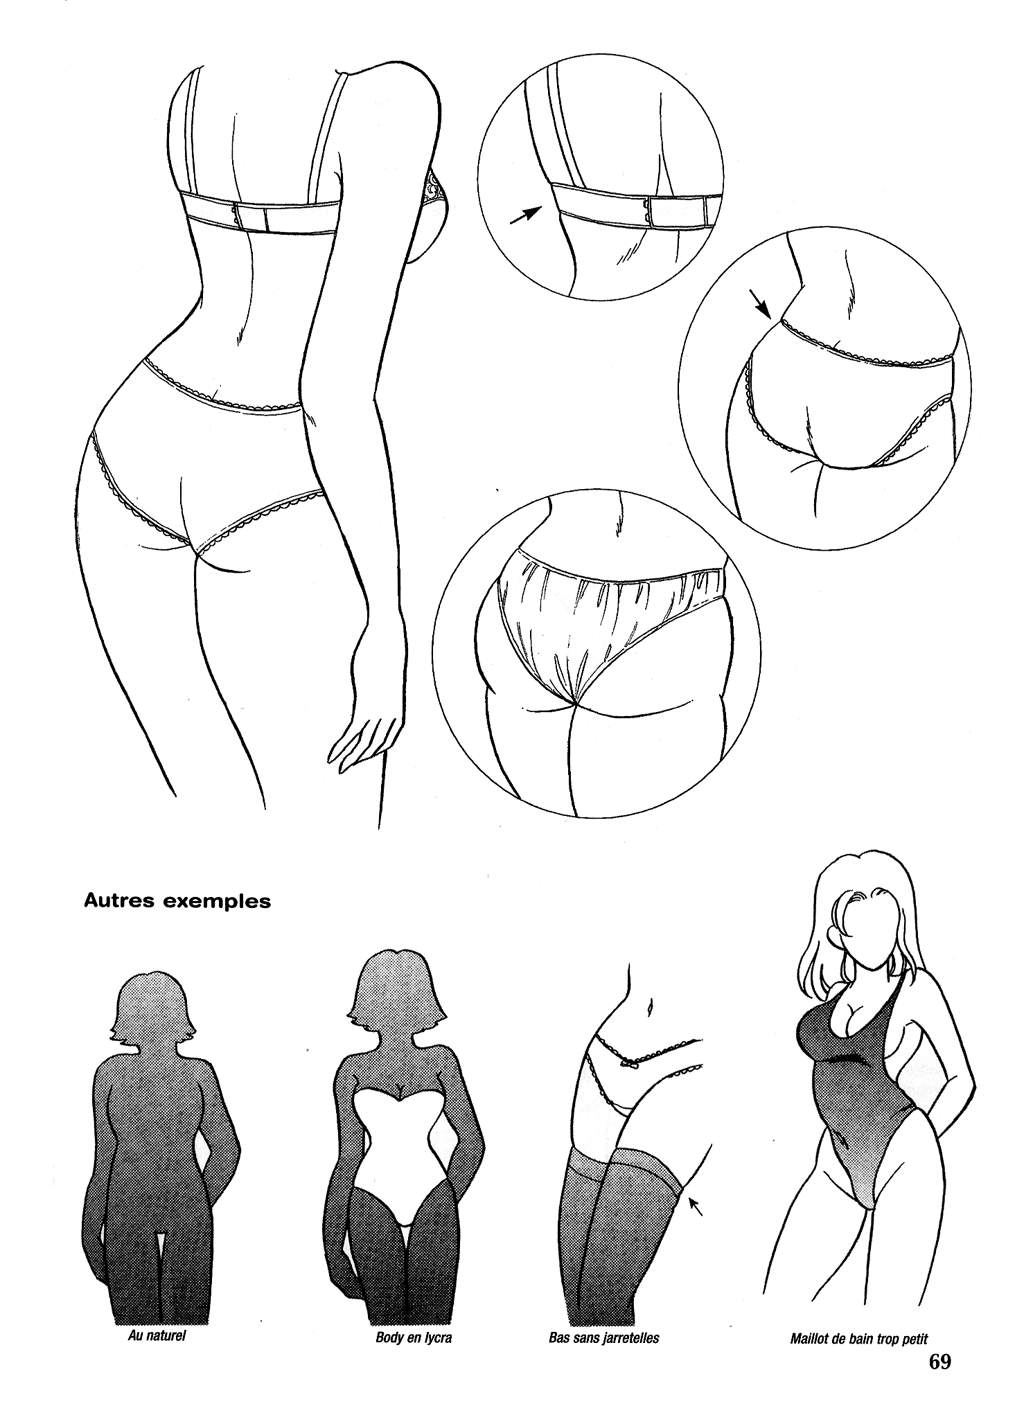 Le dessin du Manga 04 - Personnages feminin, Attitudes, Expressions numero d'image 69